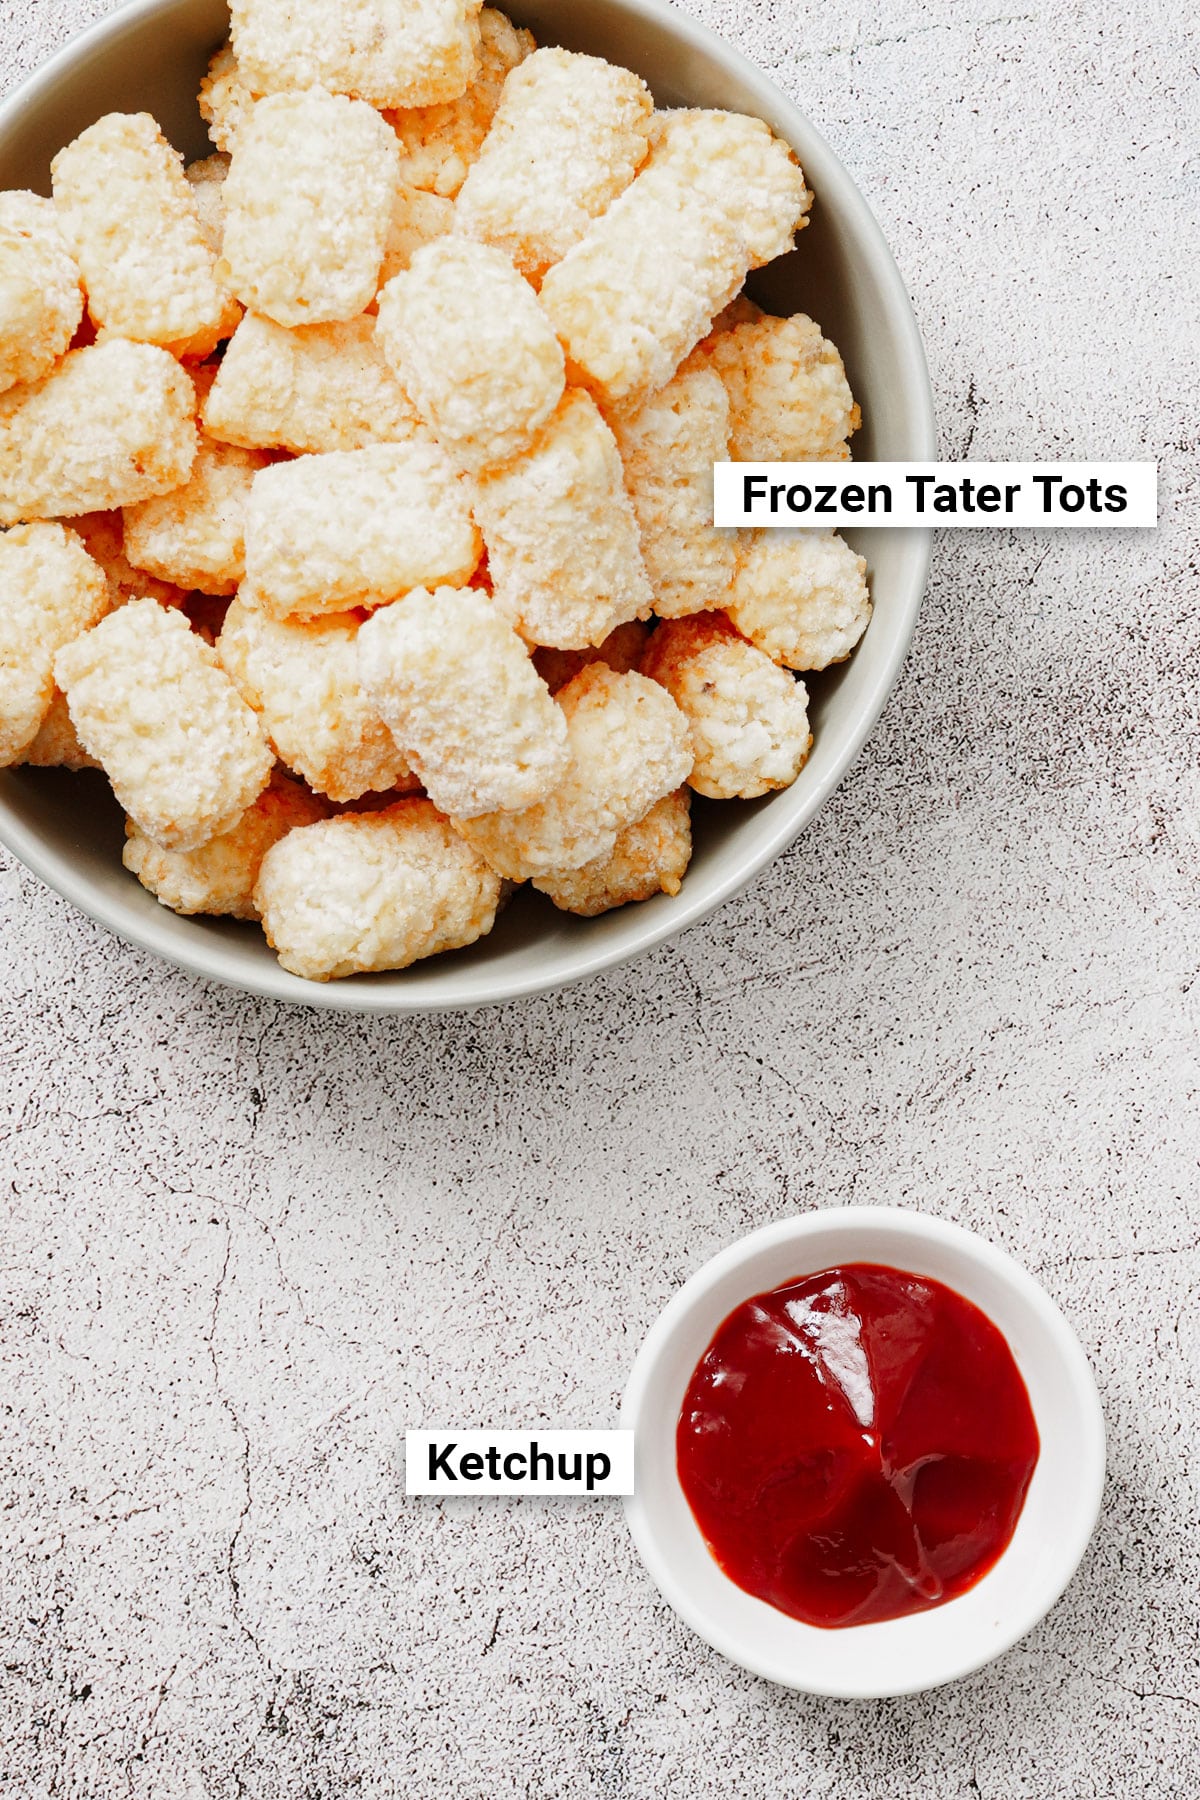 Frozen tater tots and ketchup